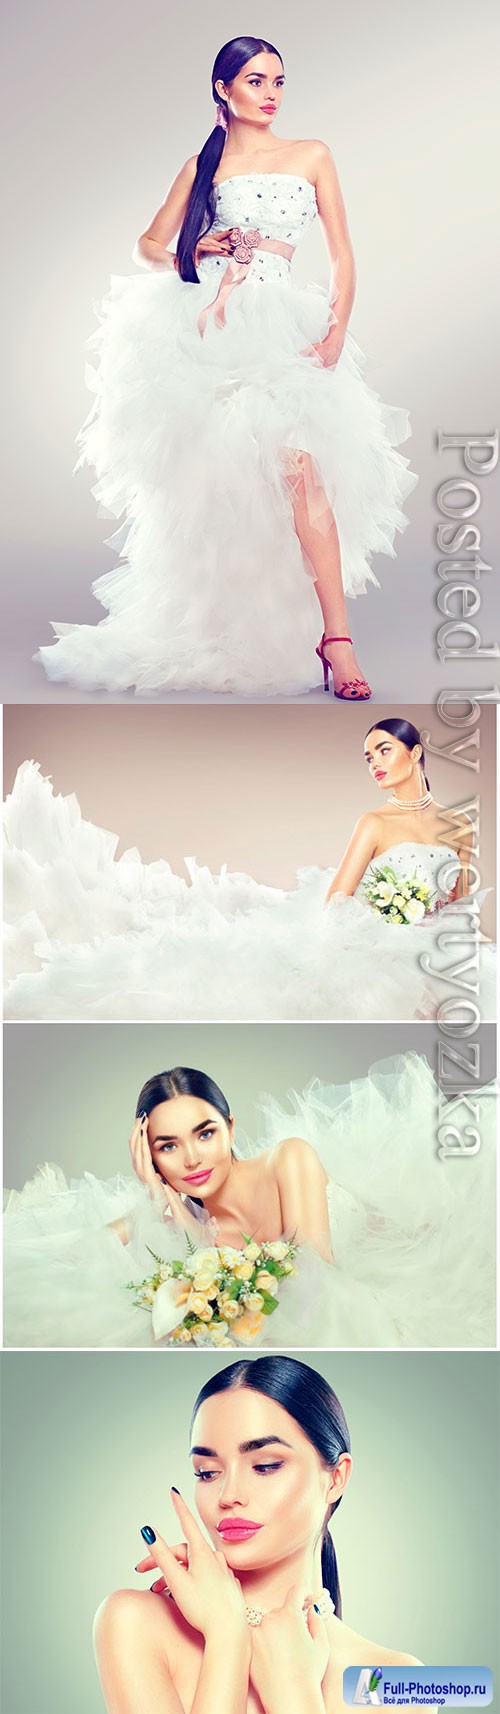 Bride in fashionable wedding dress stock photo